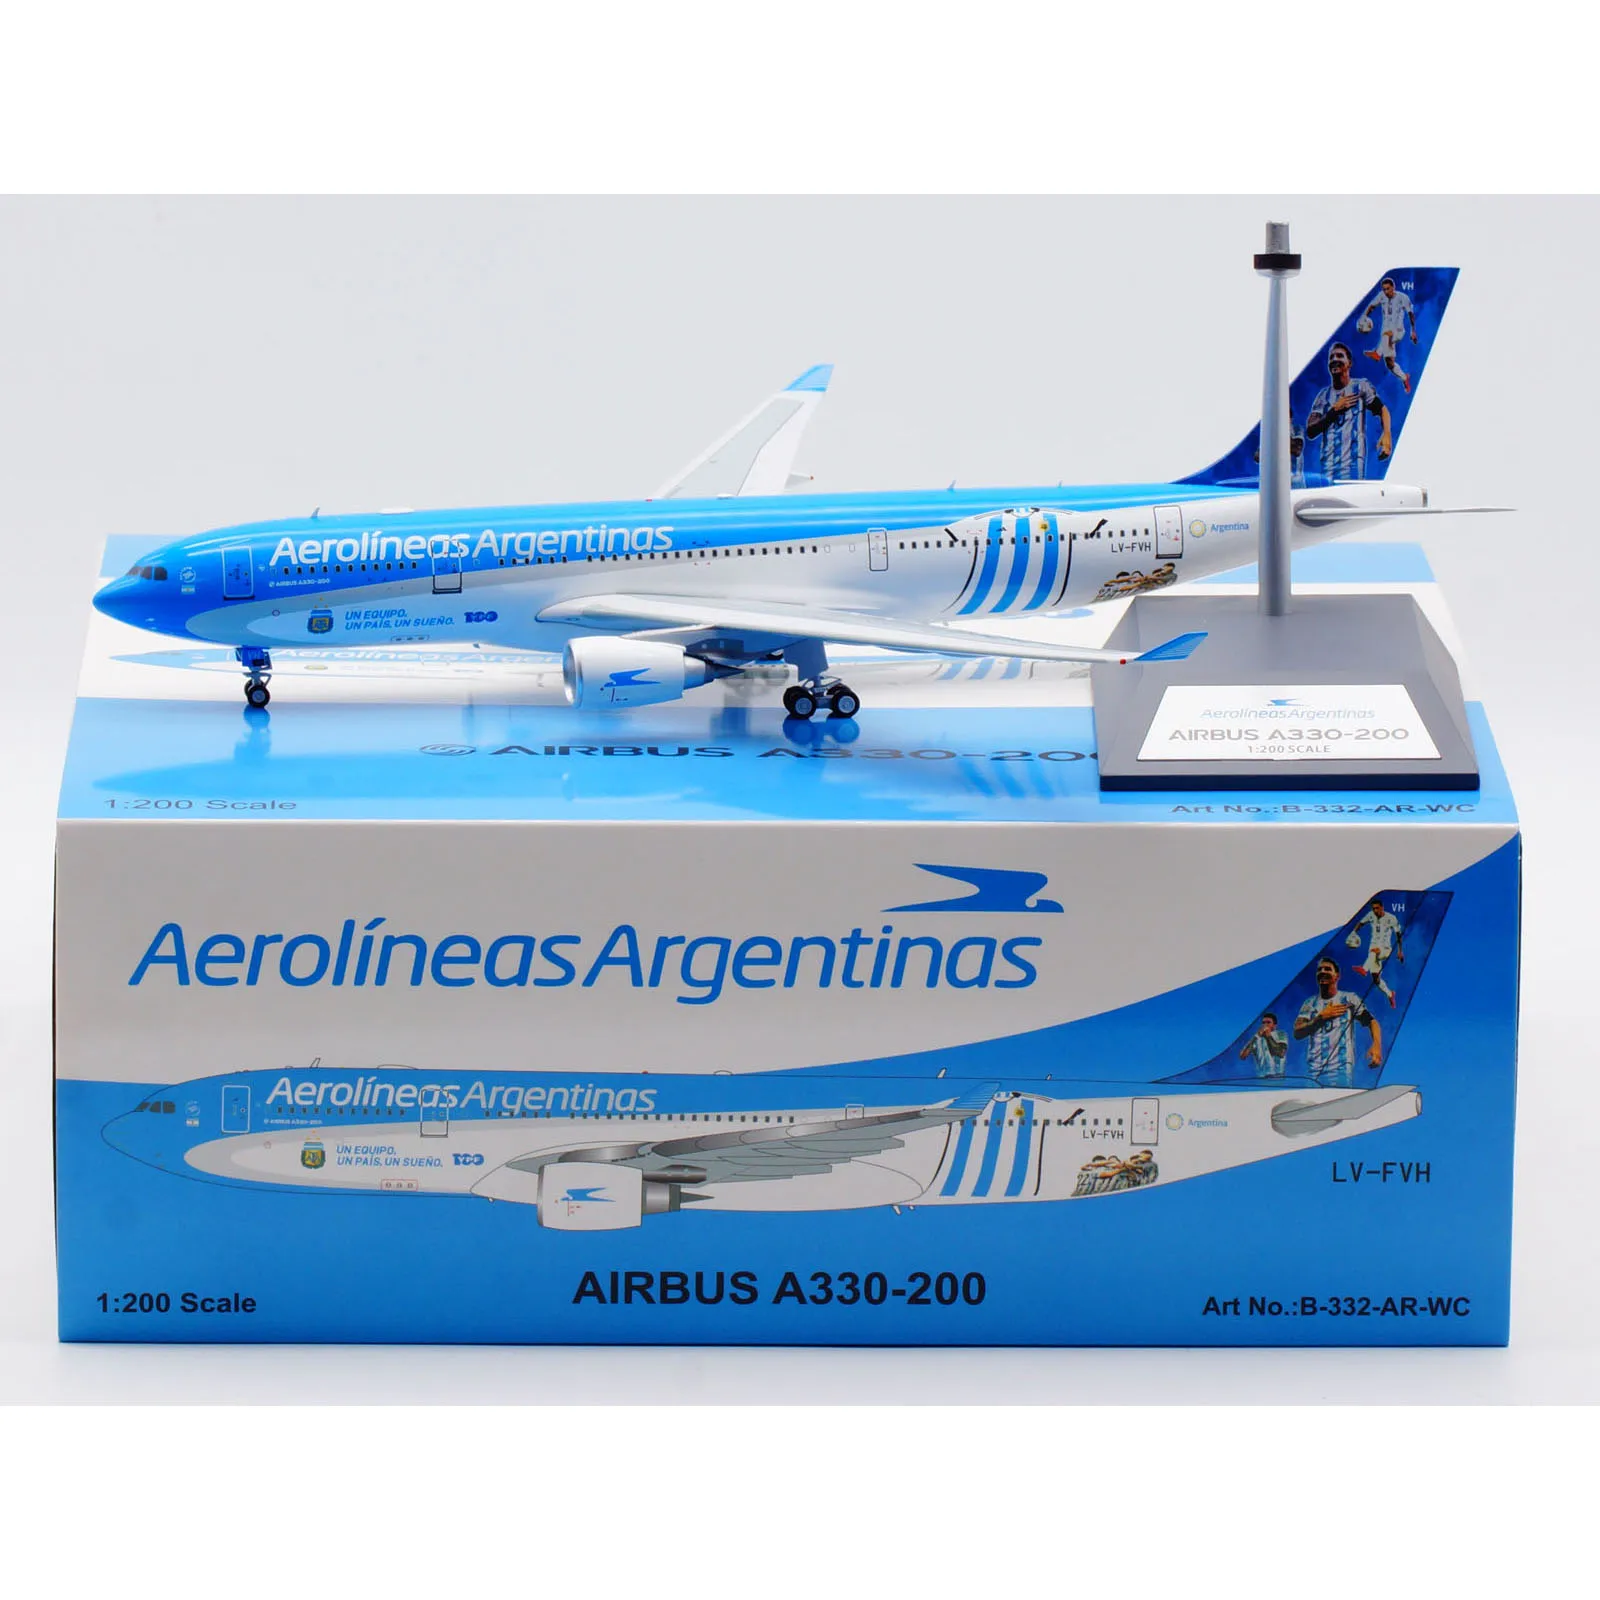 B-332-AR-WC Alloy Collectible Plane Gift B-Models 1:200 Aerolíneas Argentinas A330-200 Diecast Aircraft Jet Model LV-FVH